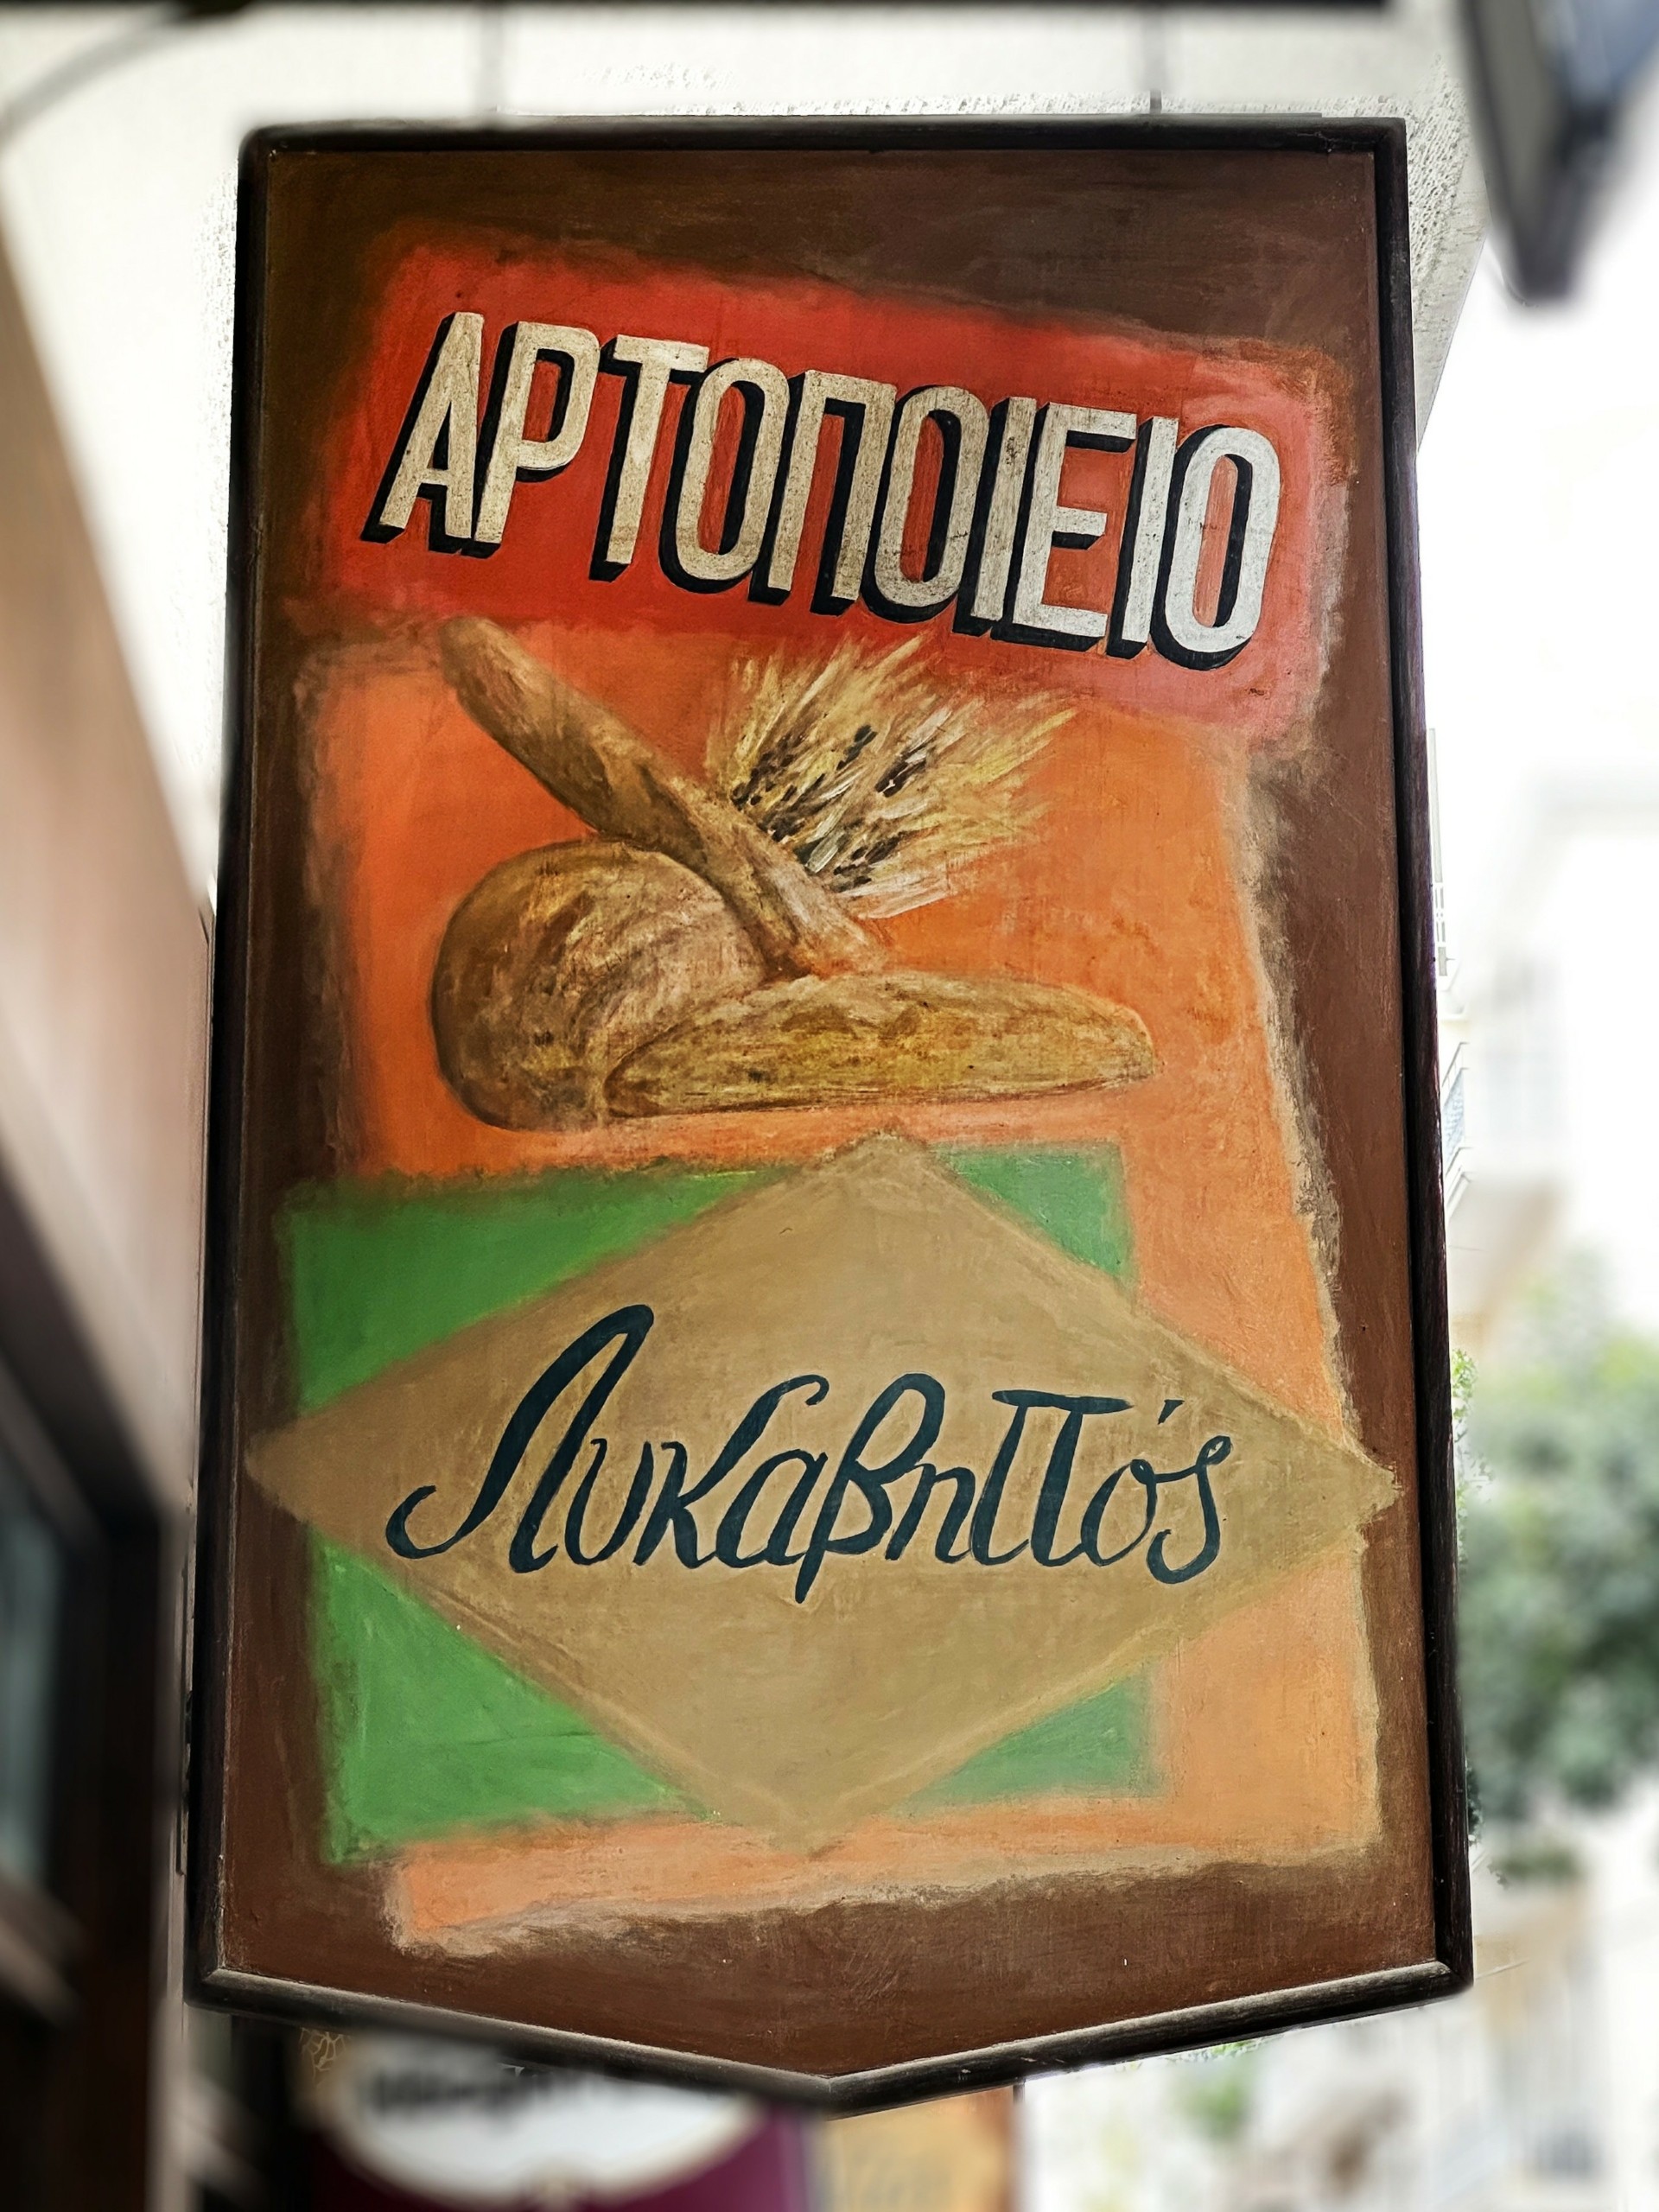 Tρεις κορυφαίοι φούρνοι της Αθήνας – Η φιλοσοφία, τα υλικά και γιατί ξεχωρίζουν